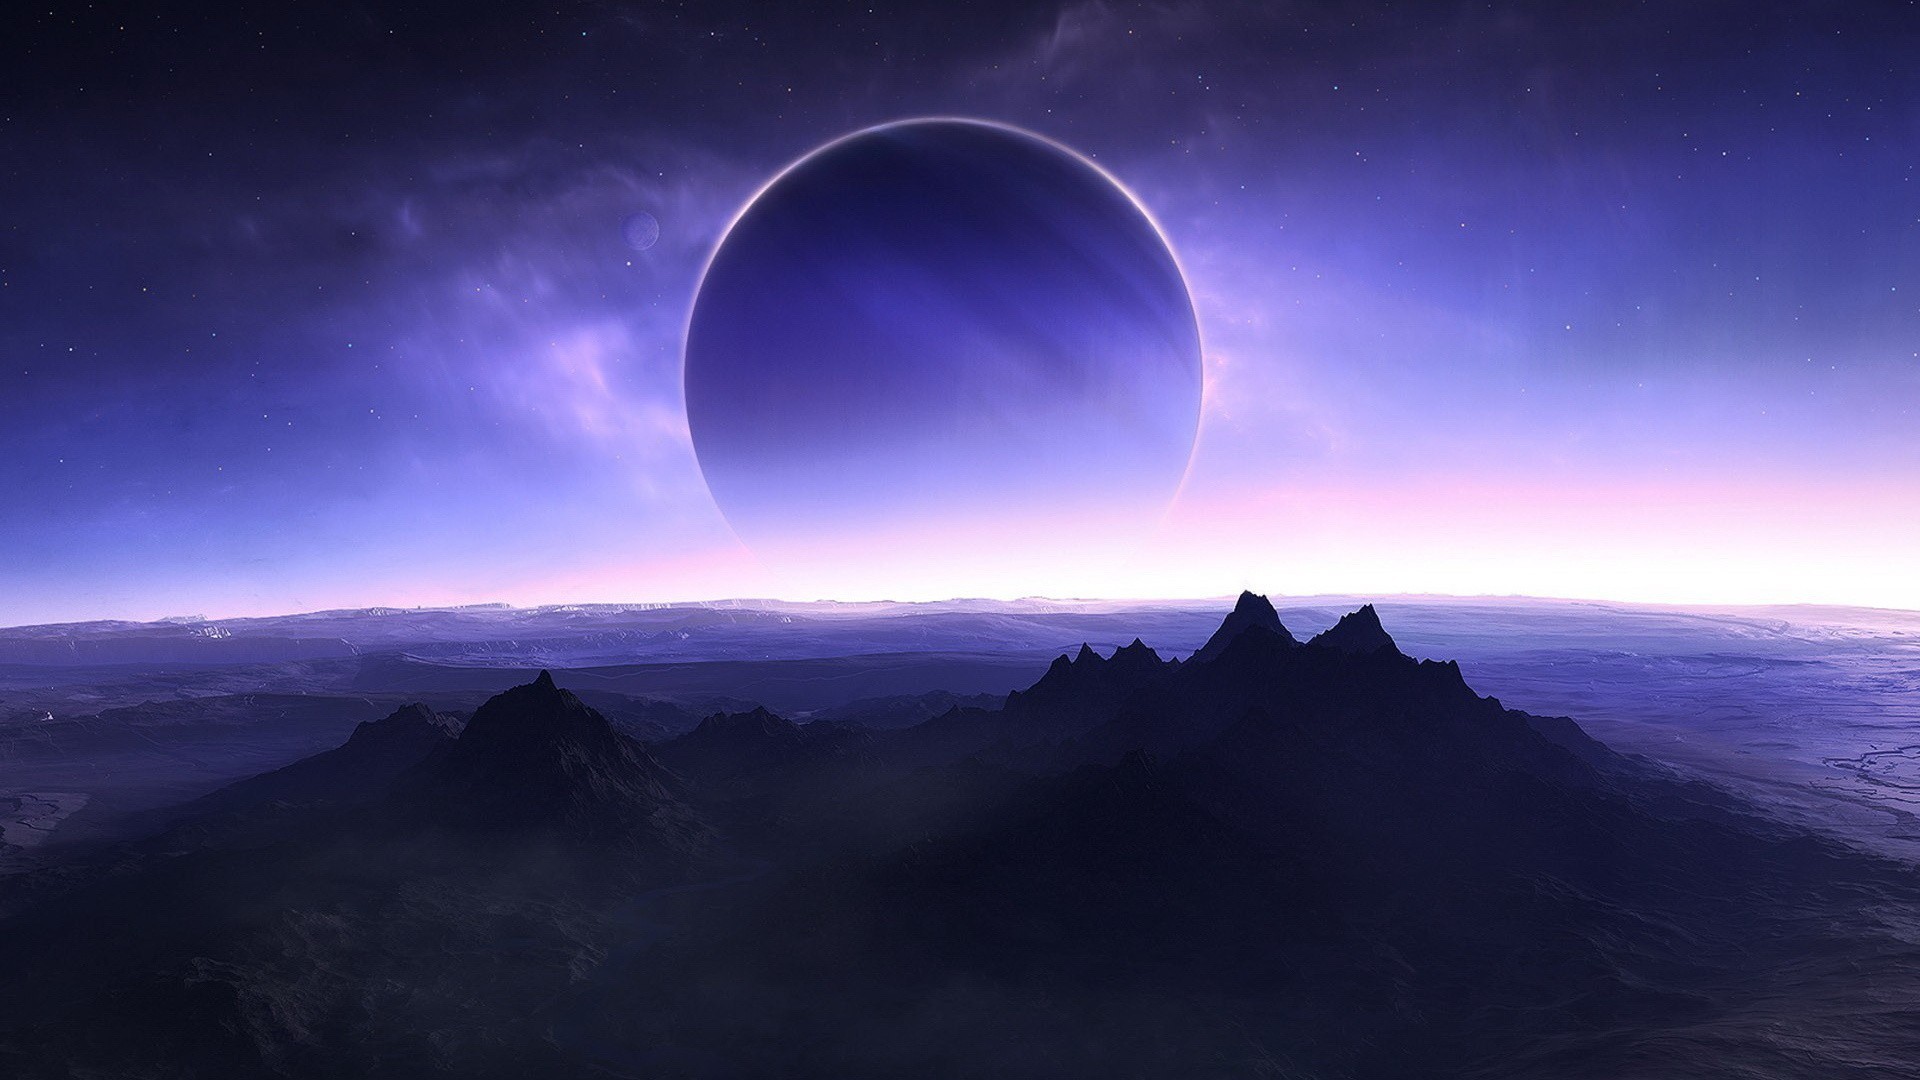 General 1920x1080 planet solar eclipse space art mountains digital art landscape stars violet sky